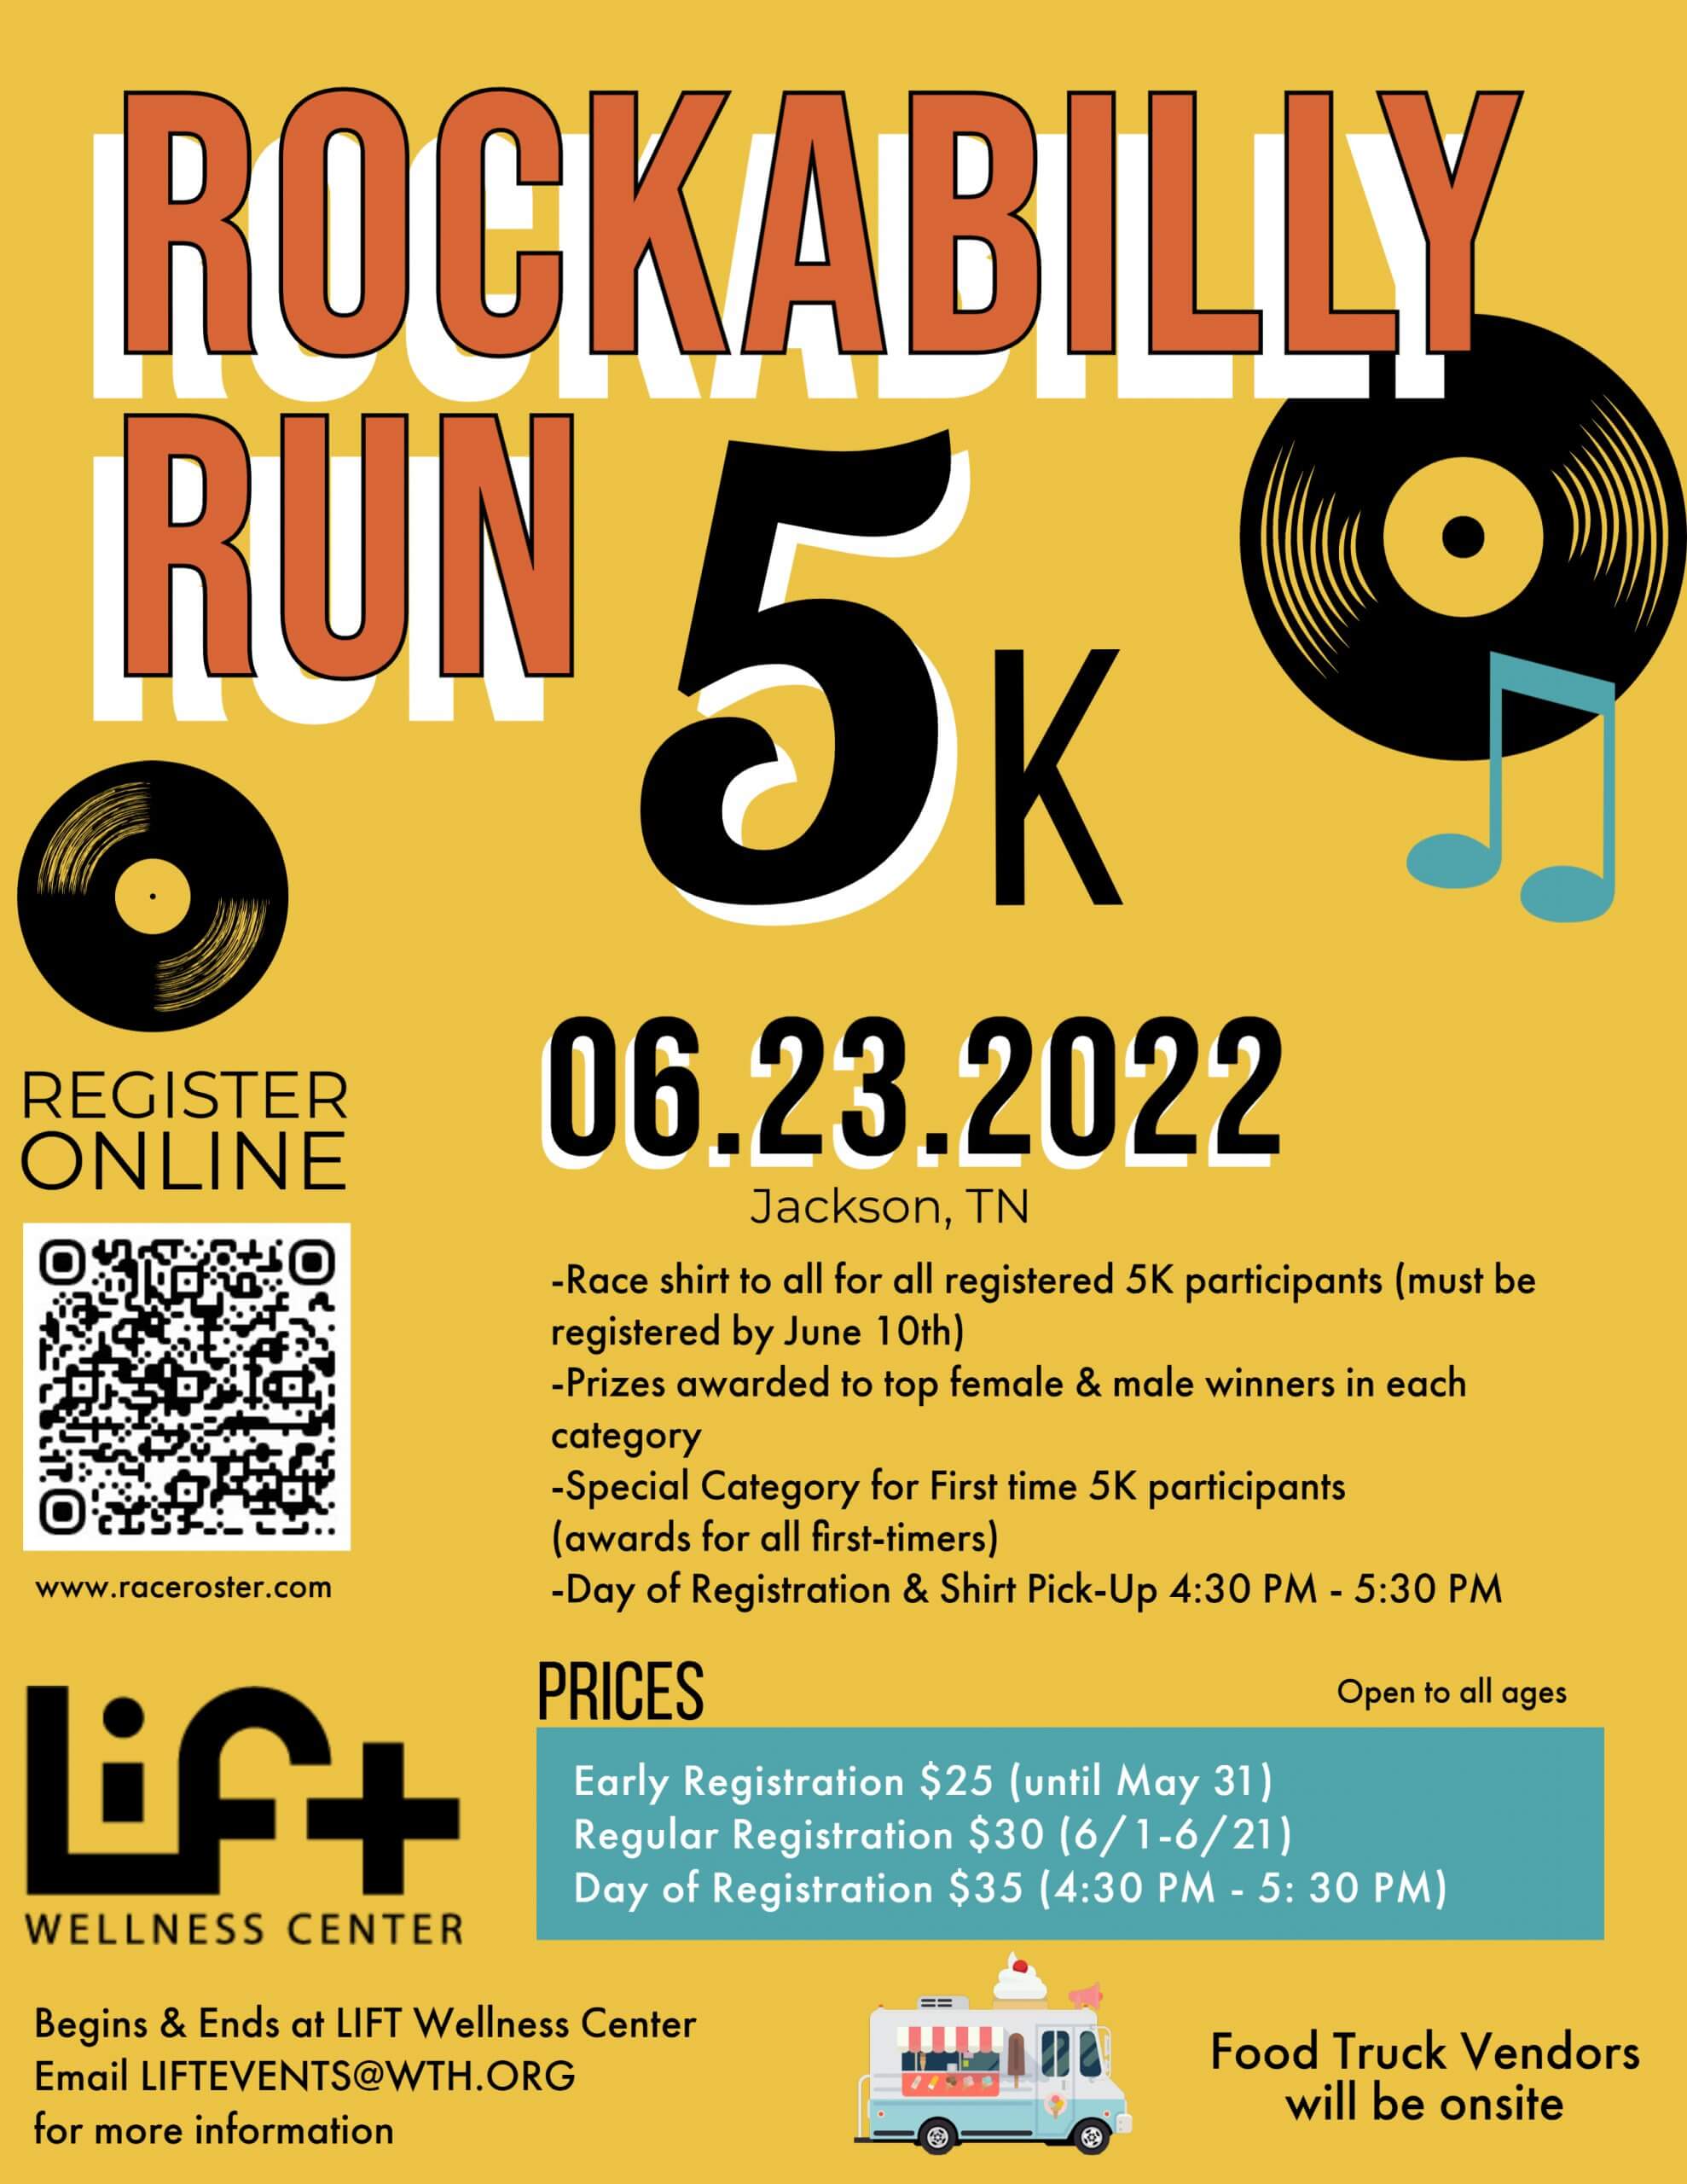 Rockabilly Run flyer with race details